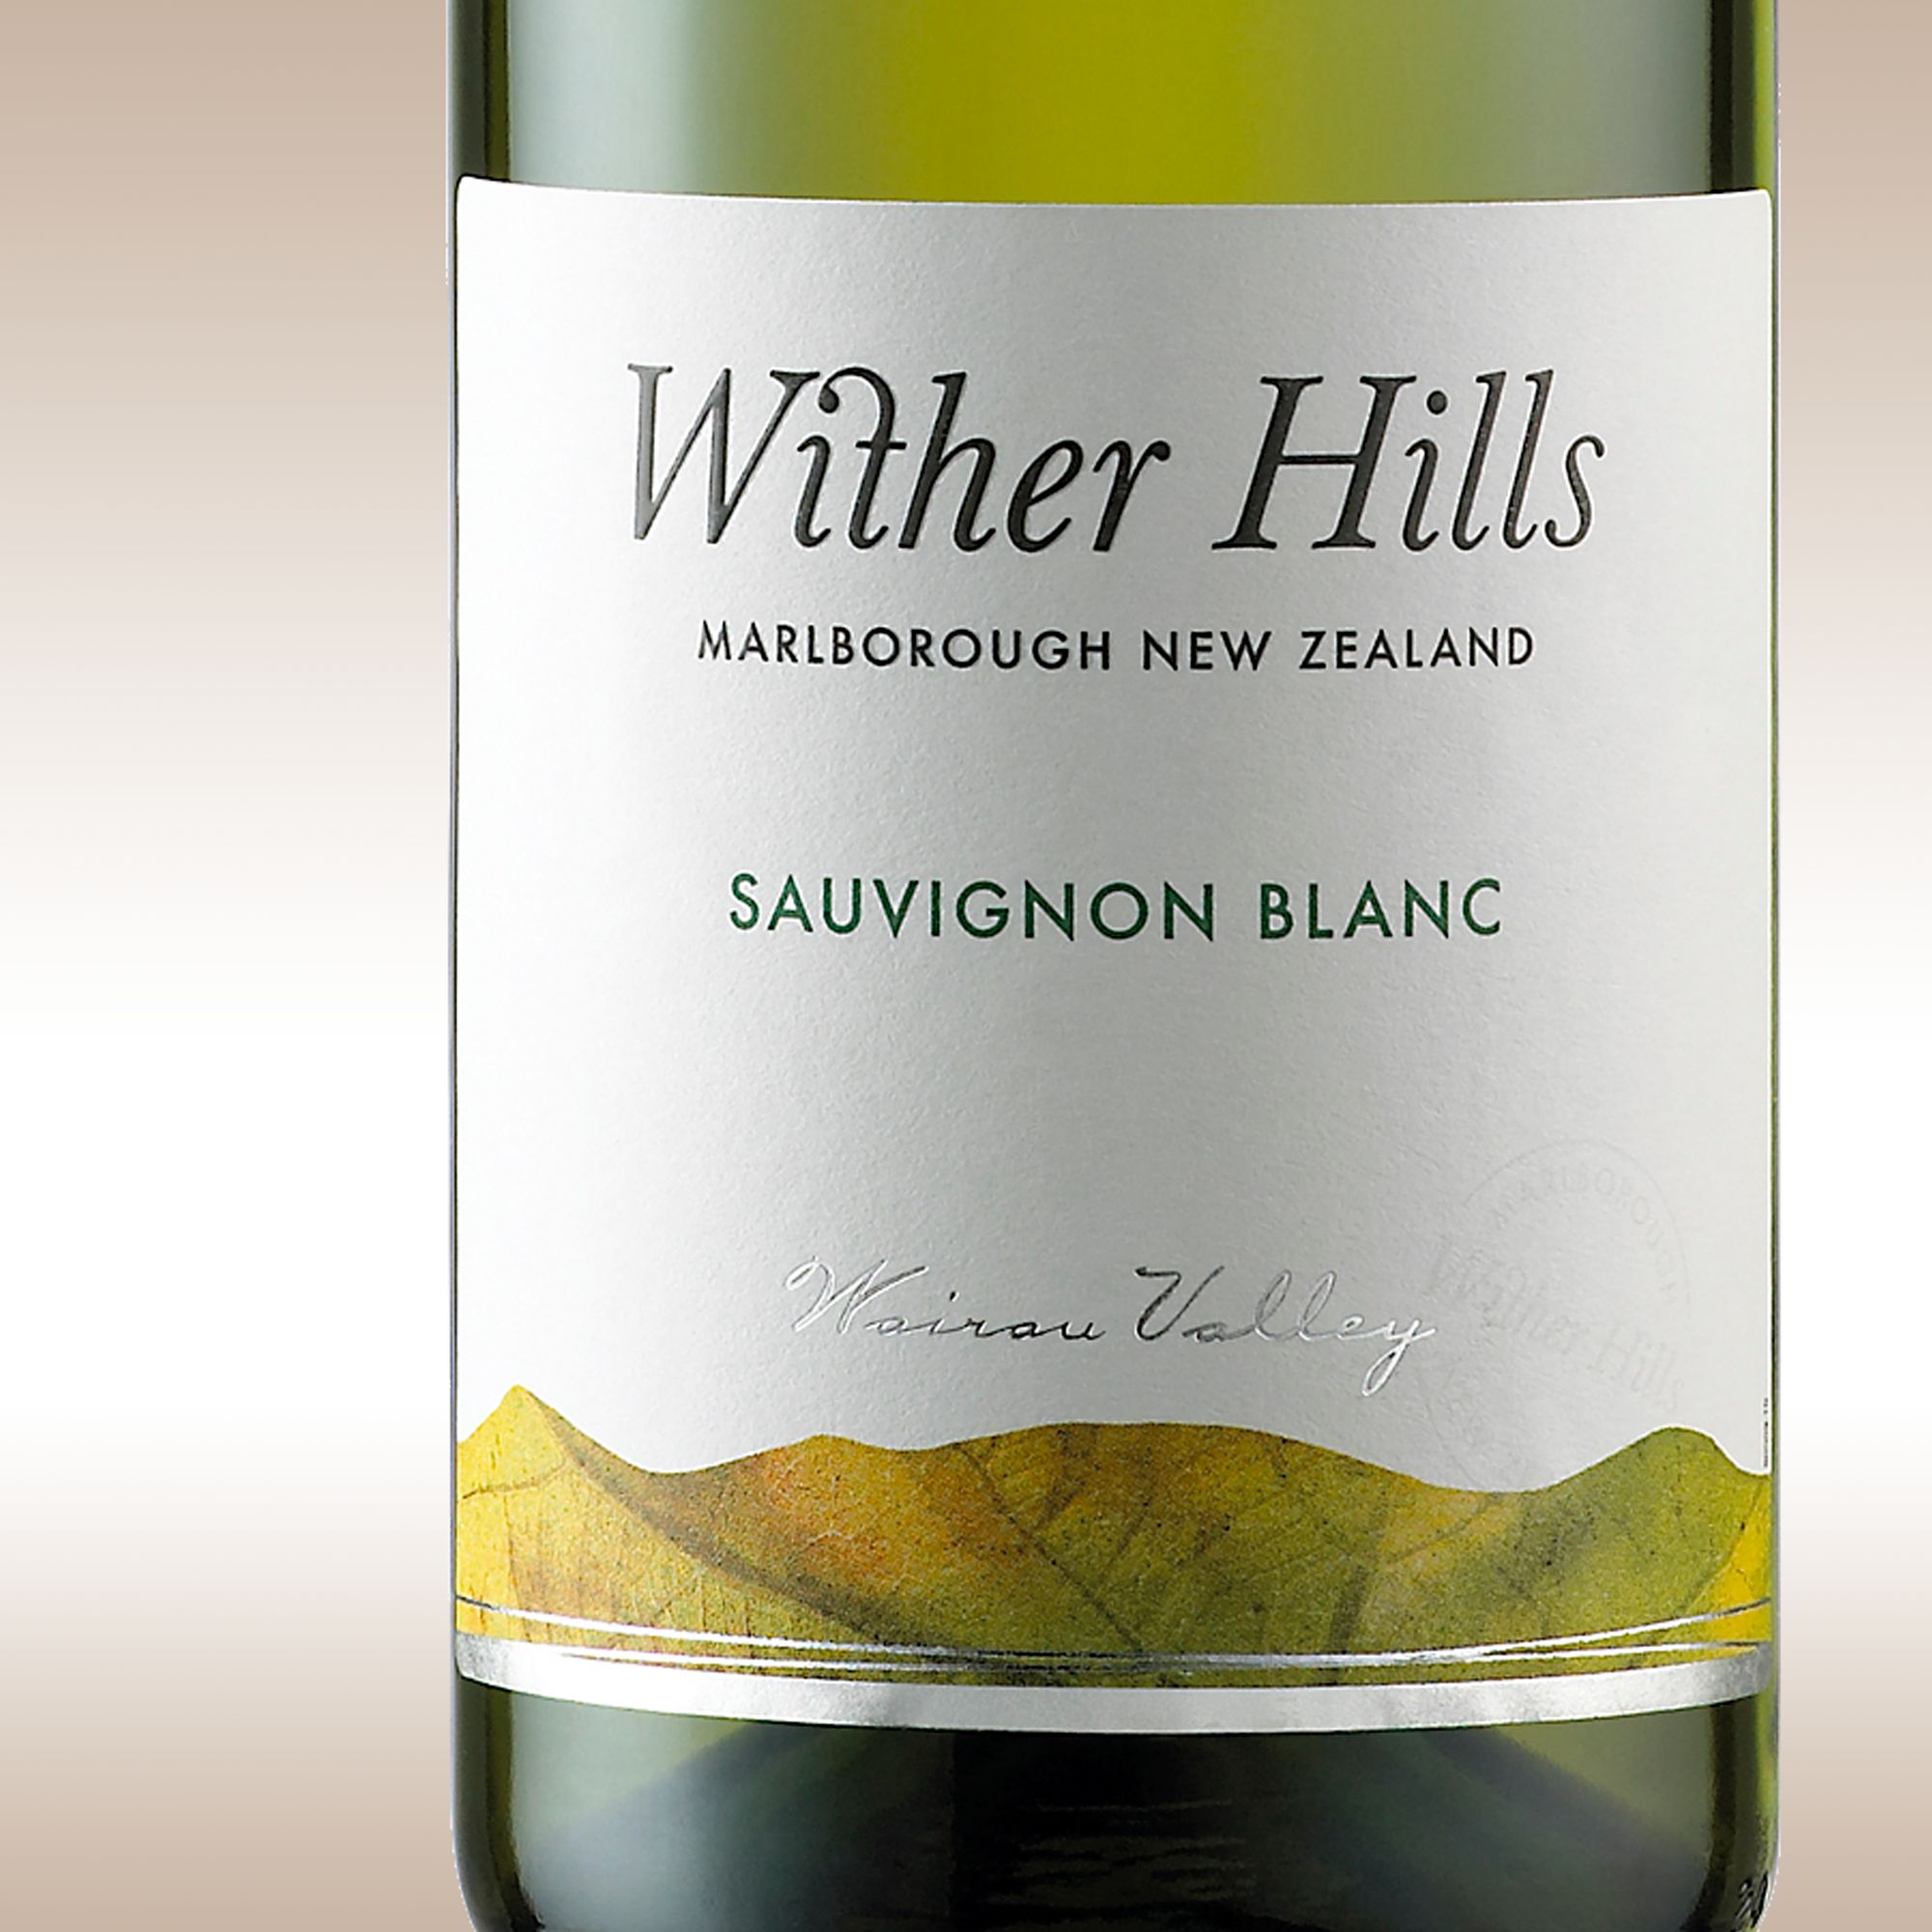 Unbranded Wither Hills Sauvignon Blanc 2007 Marlborough, New Zealand